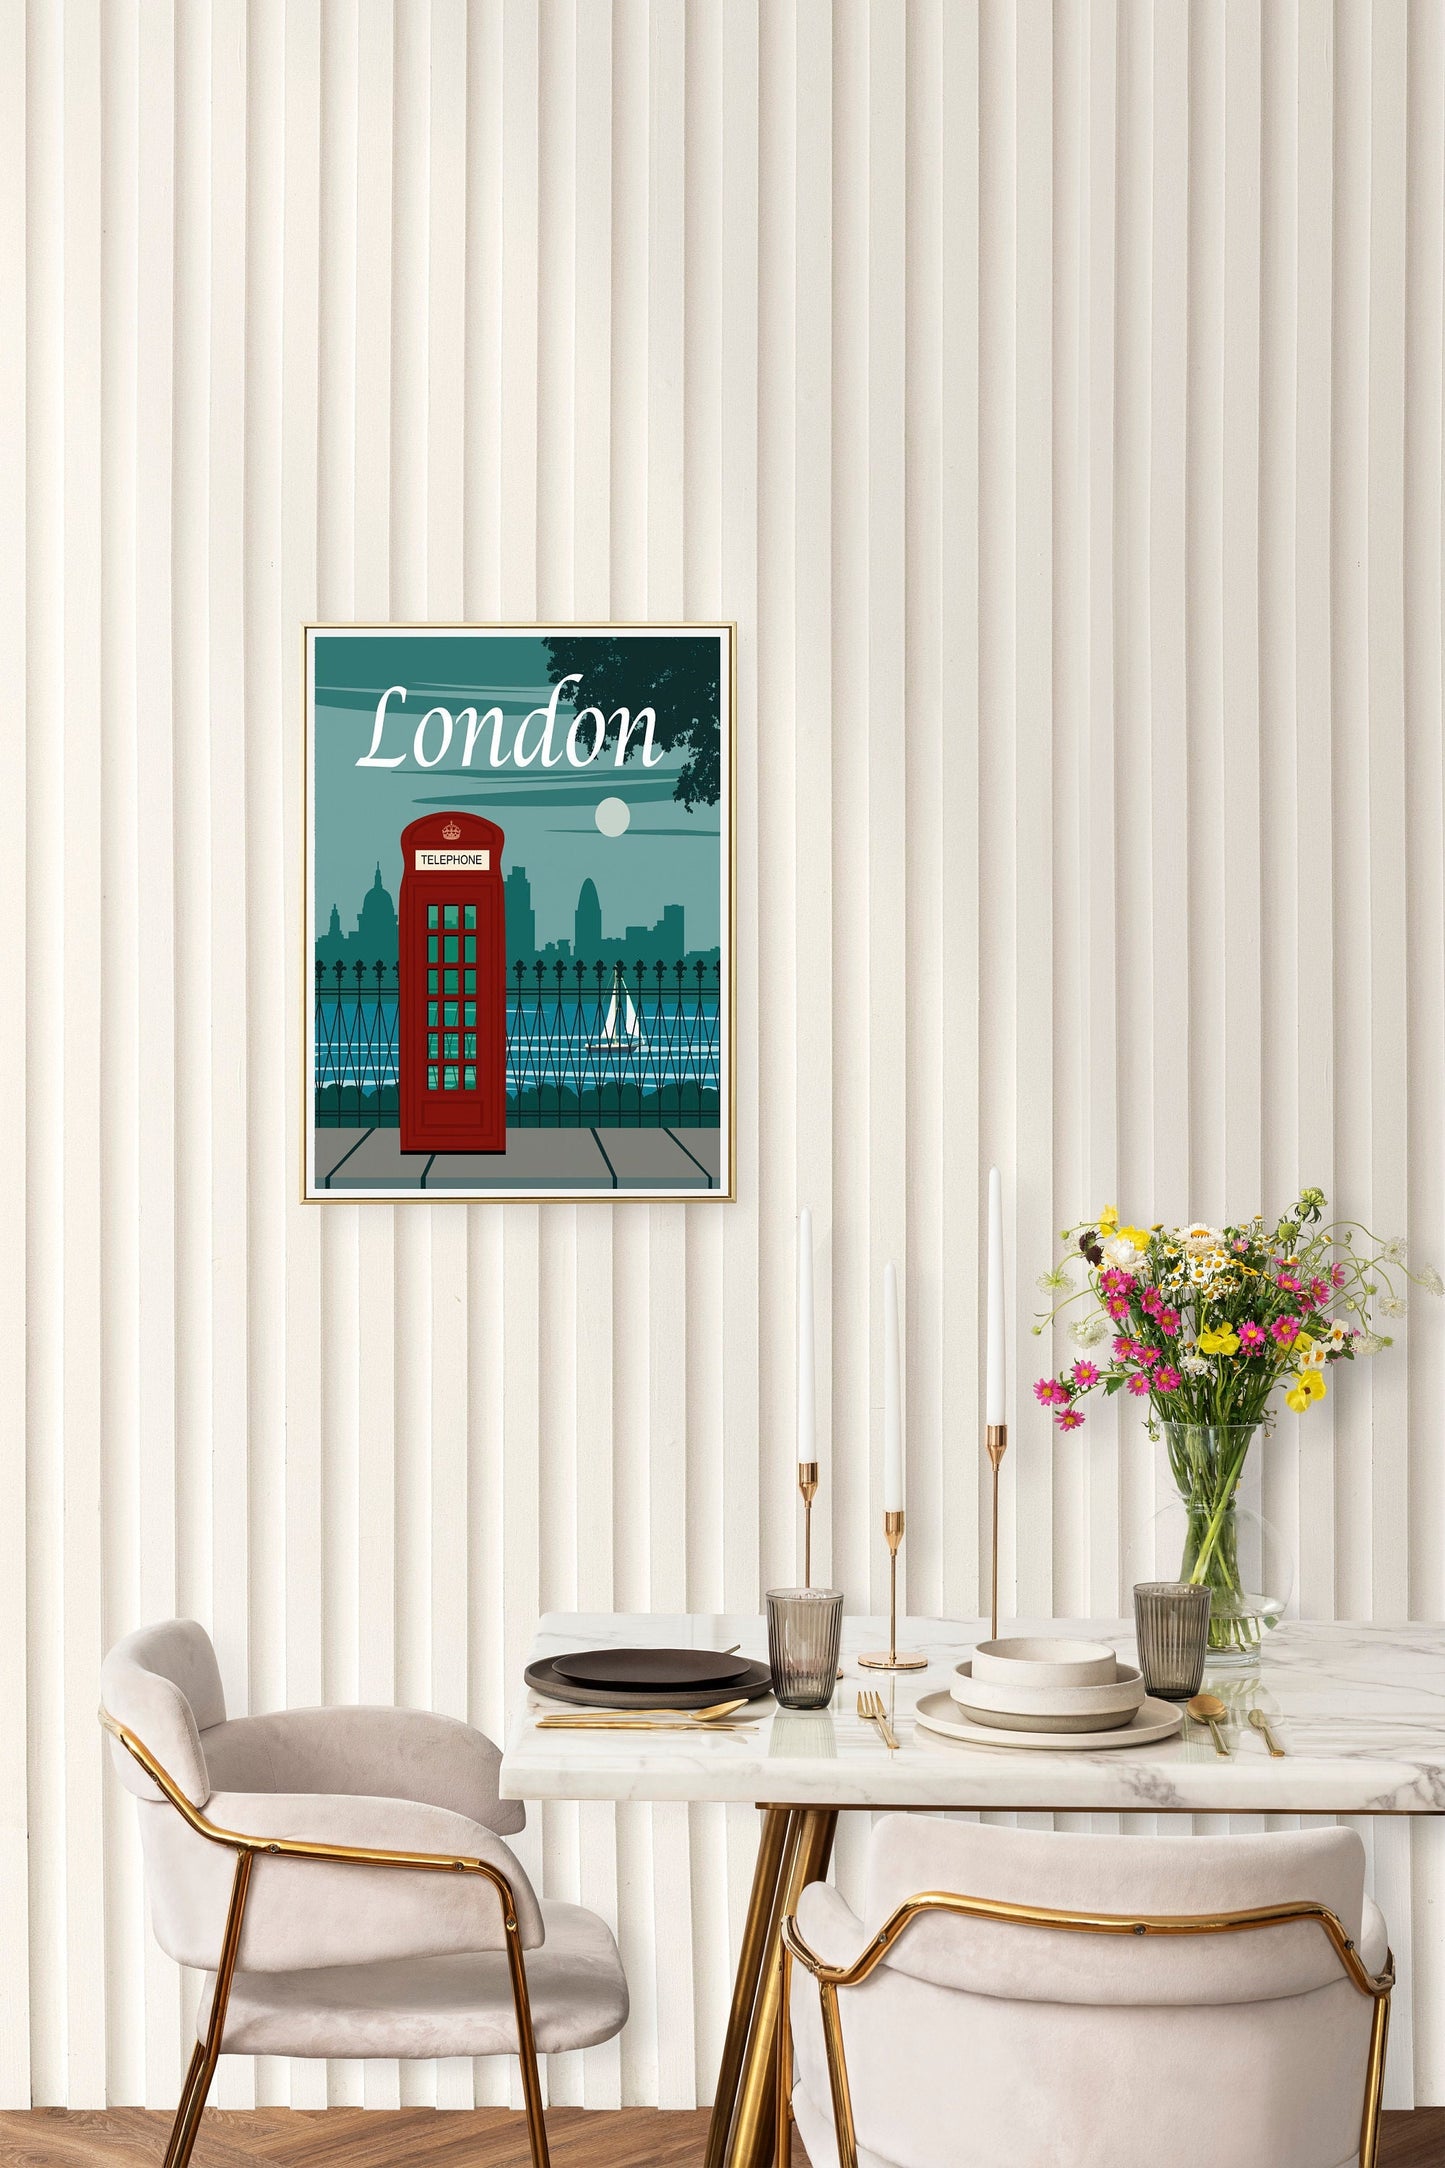 London England Travel Poster Print Wall Hanging Decor